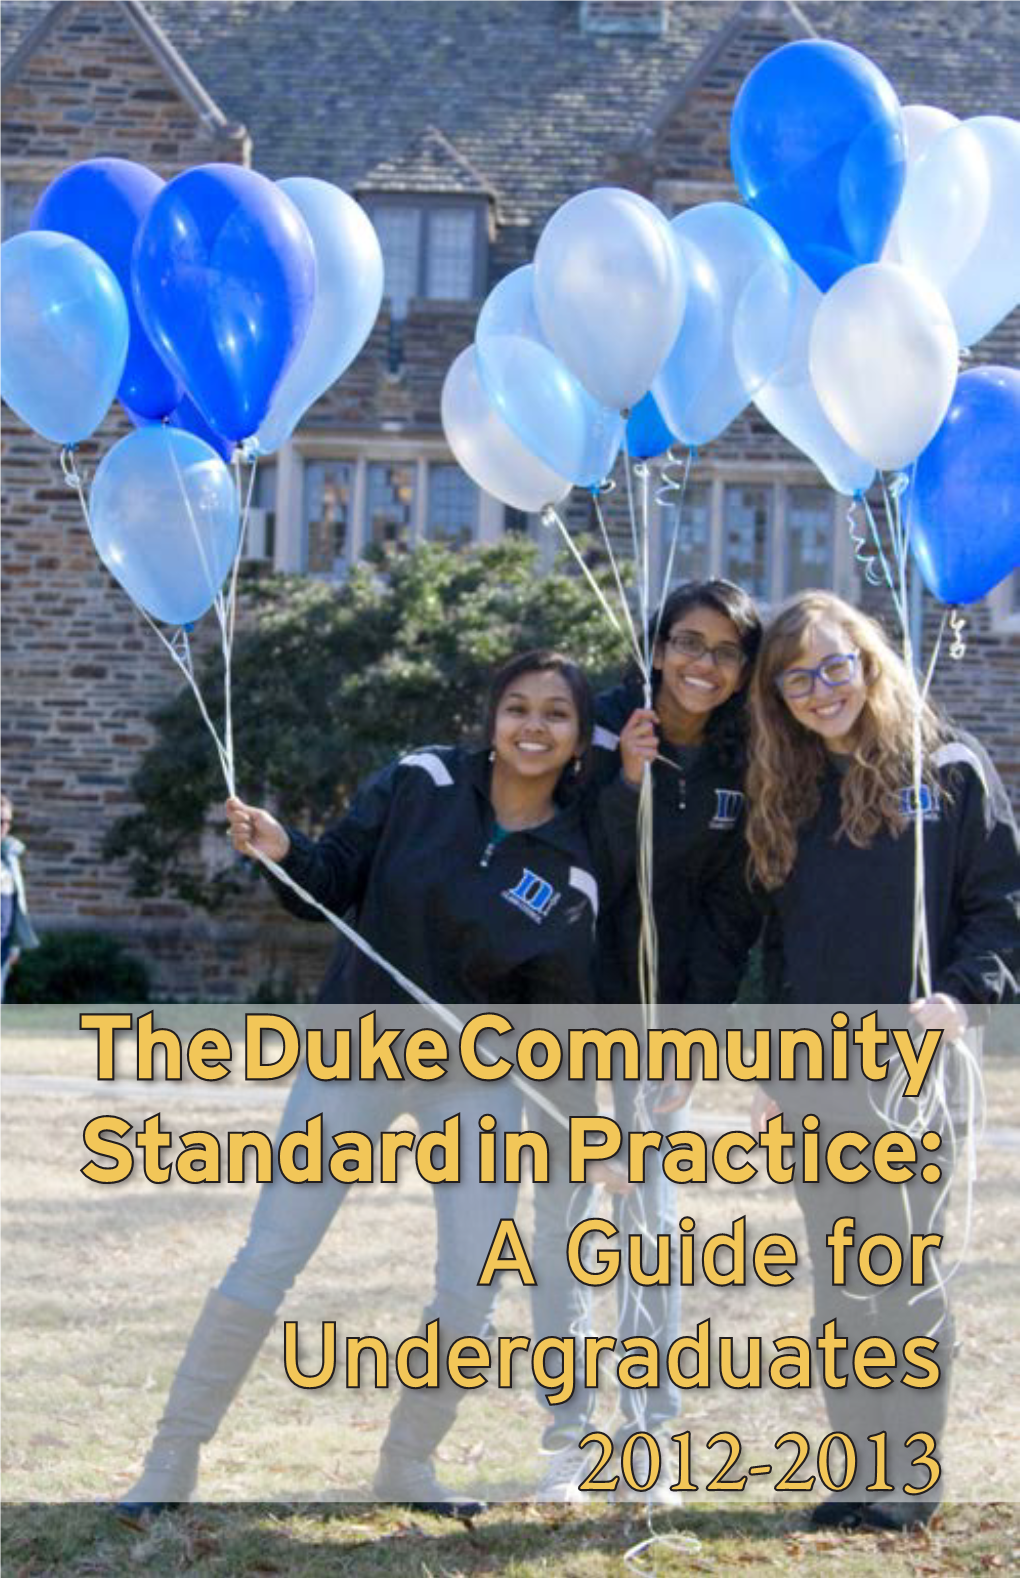 The Duke Community Standard in Practice: a Guide for Undergraduates